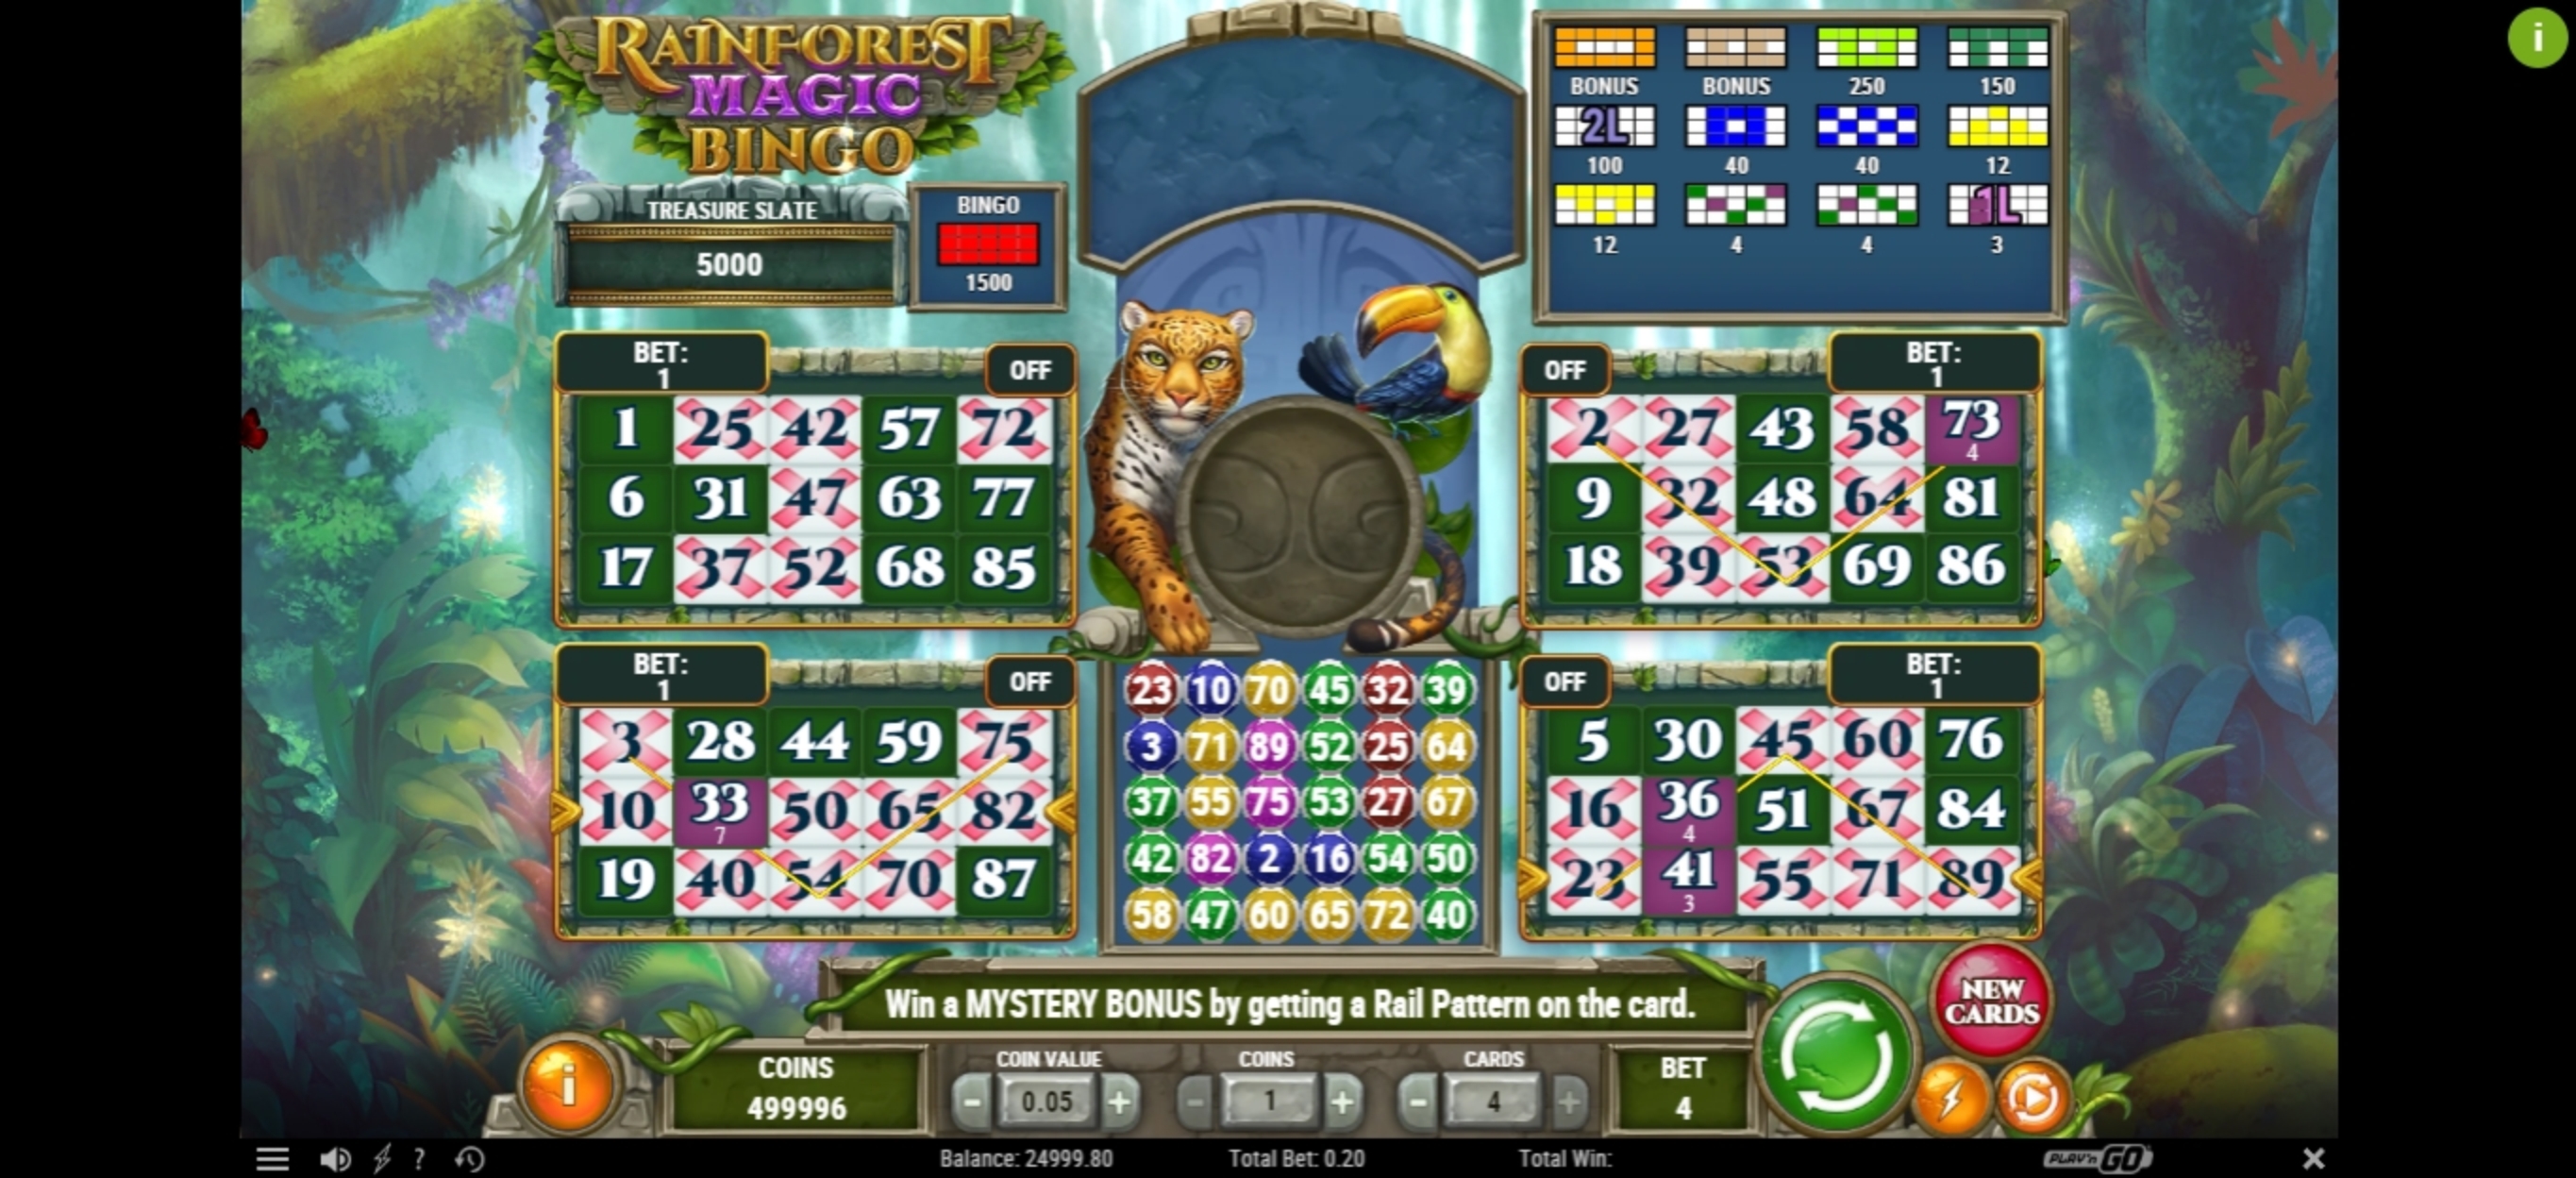 Win Money in Rainforest Magic Bingo Free Slot Game by Playn GO